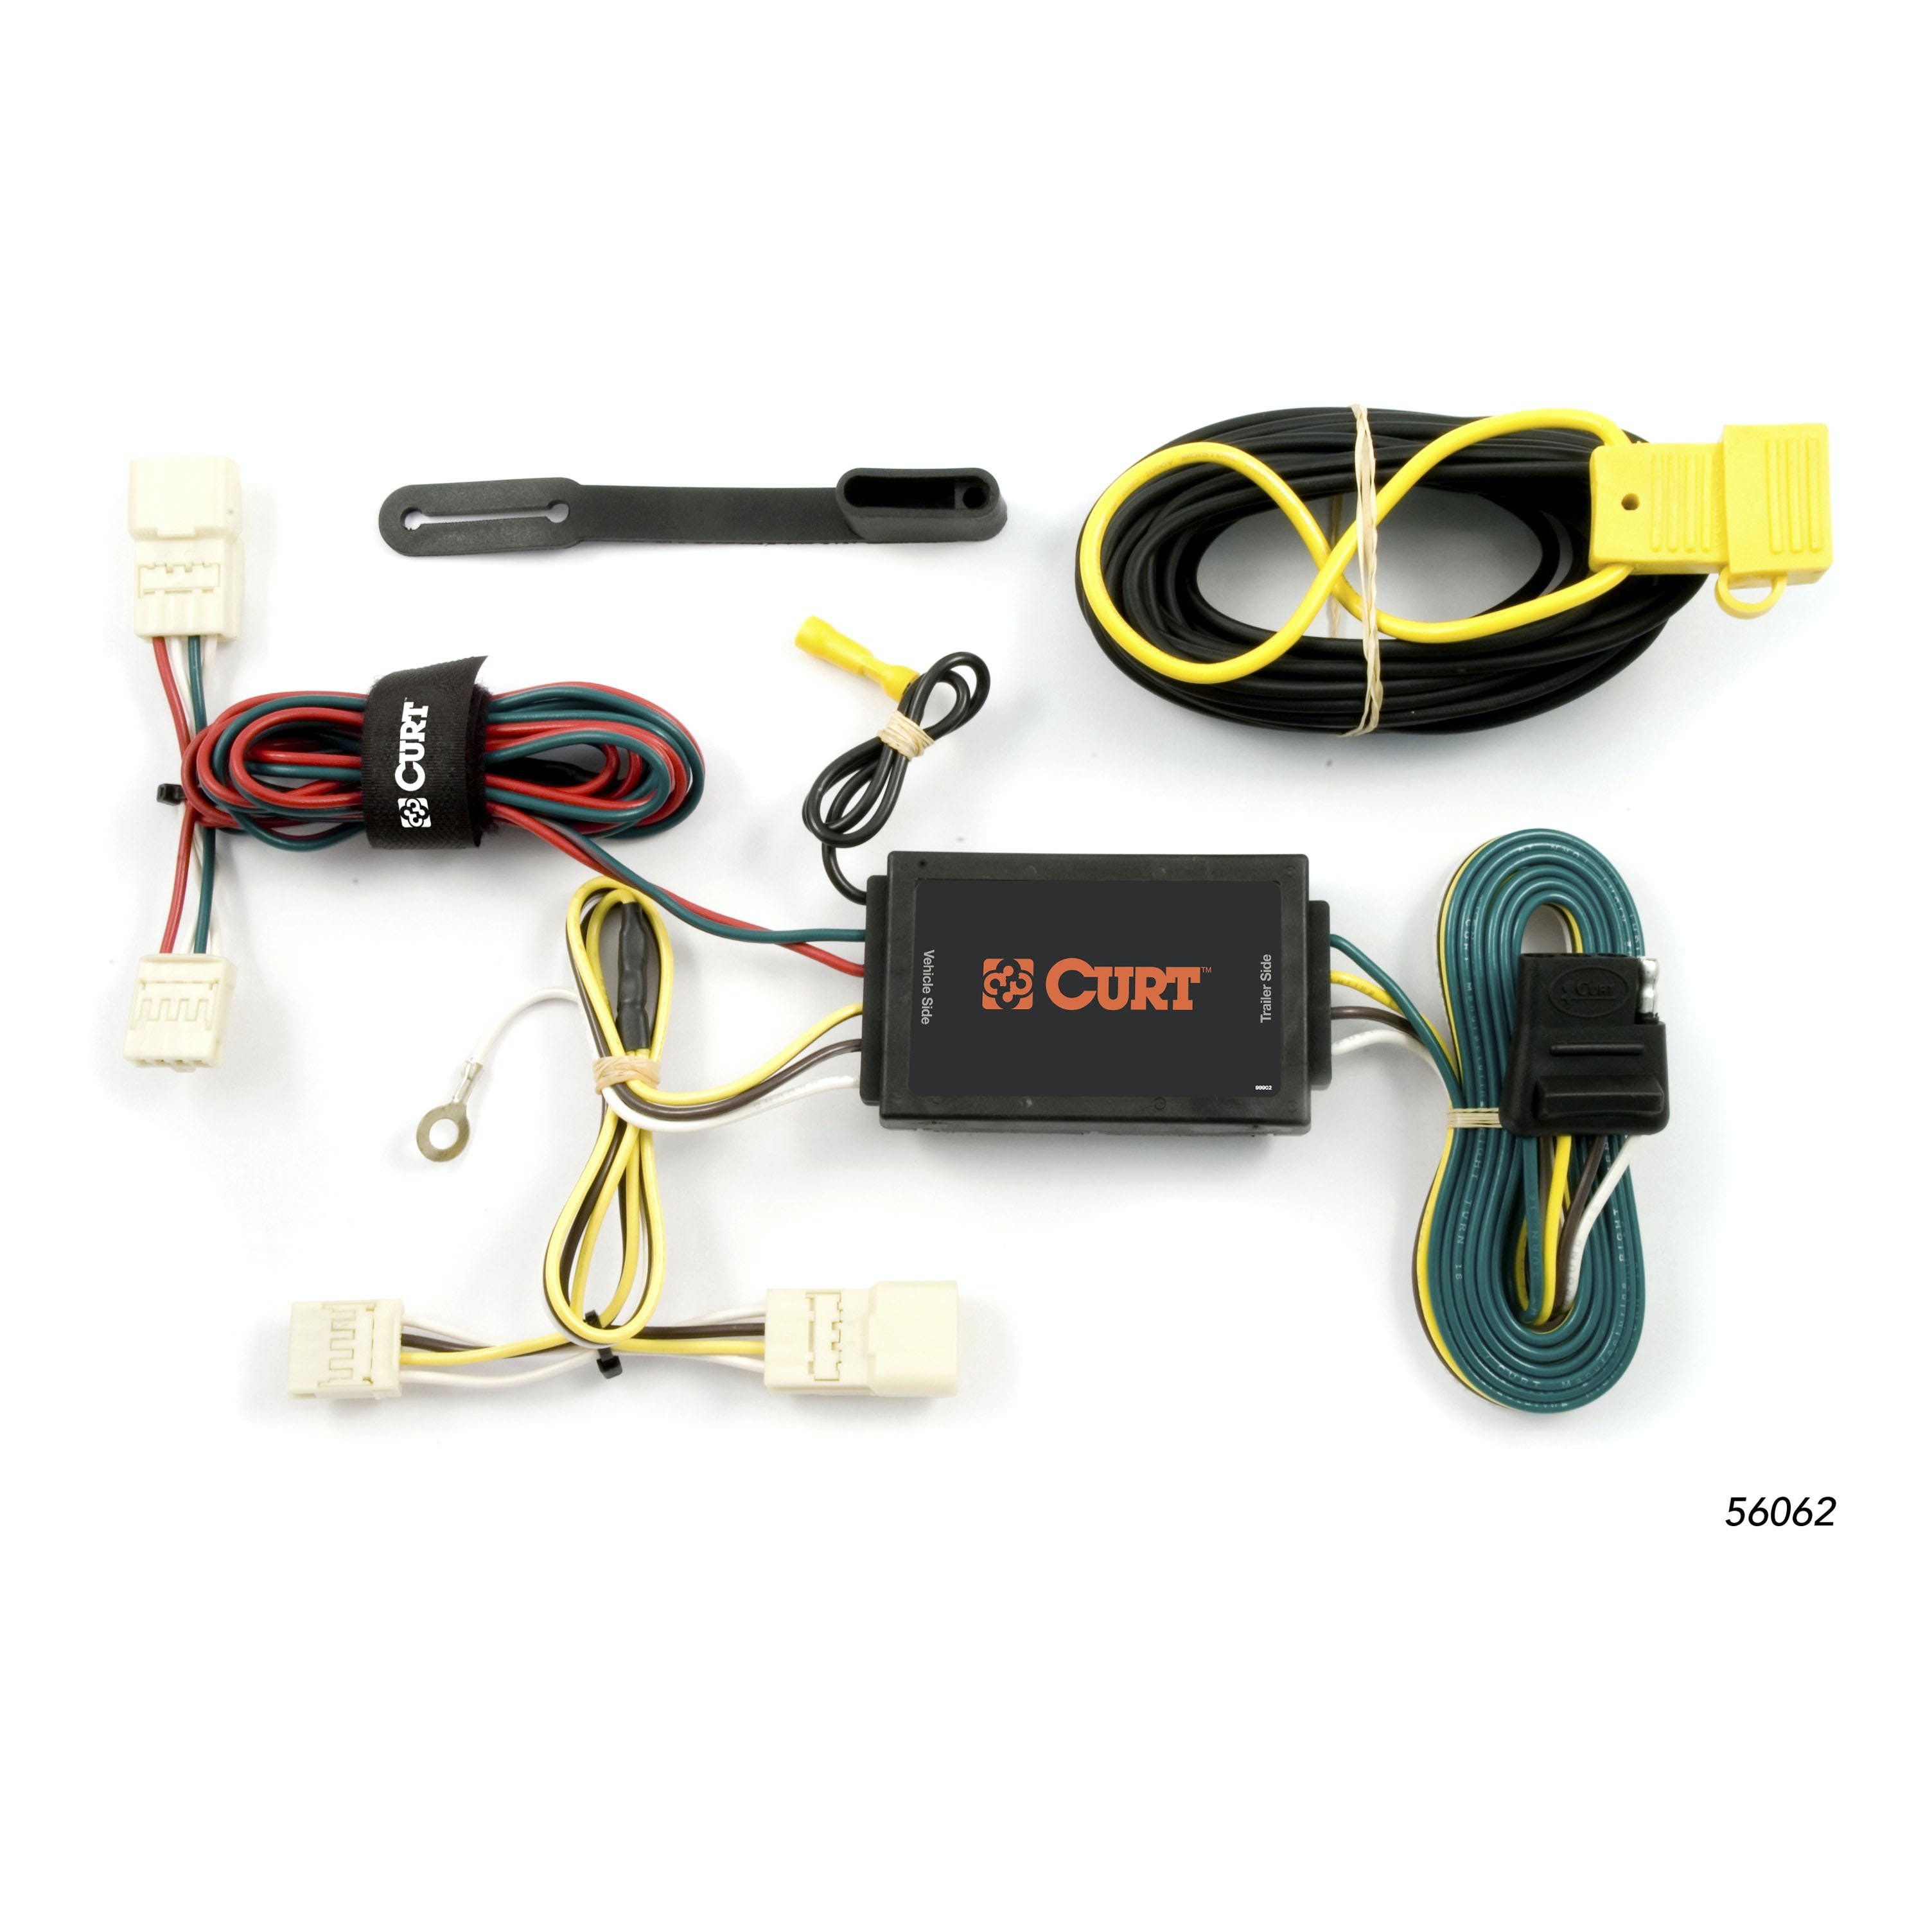 CURT 56062 Custom Wiring Harness, 4-Way Flat Output, Select Scion xB